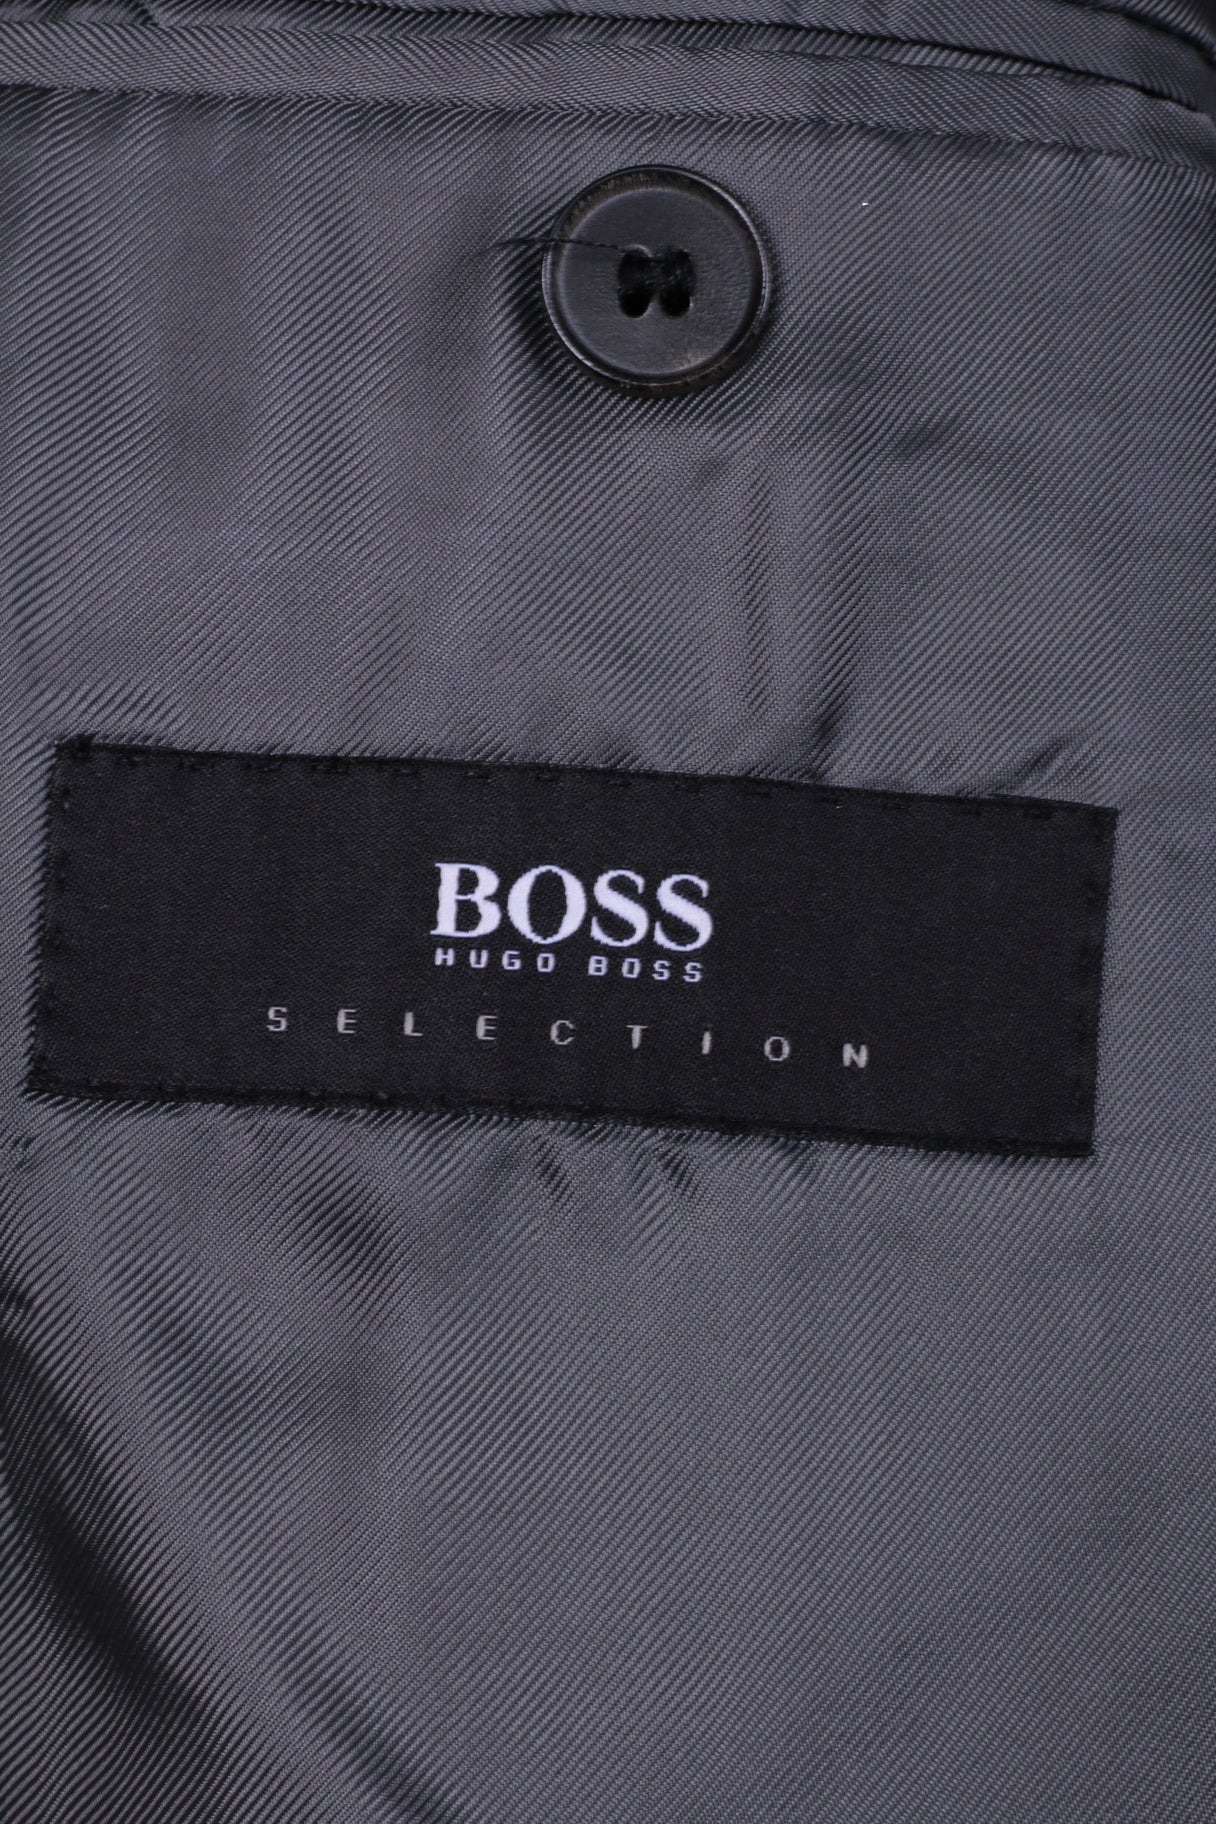 Hugo Boss Men 25 40 Blazer Charcoal Single Breasted Gilbert2/Tower Wool Jacket